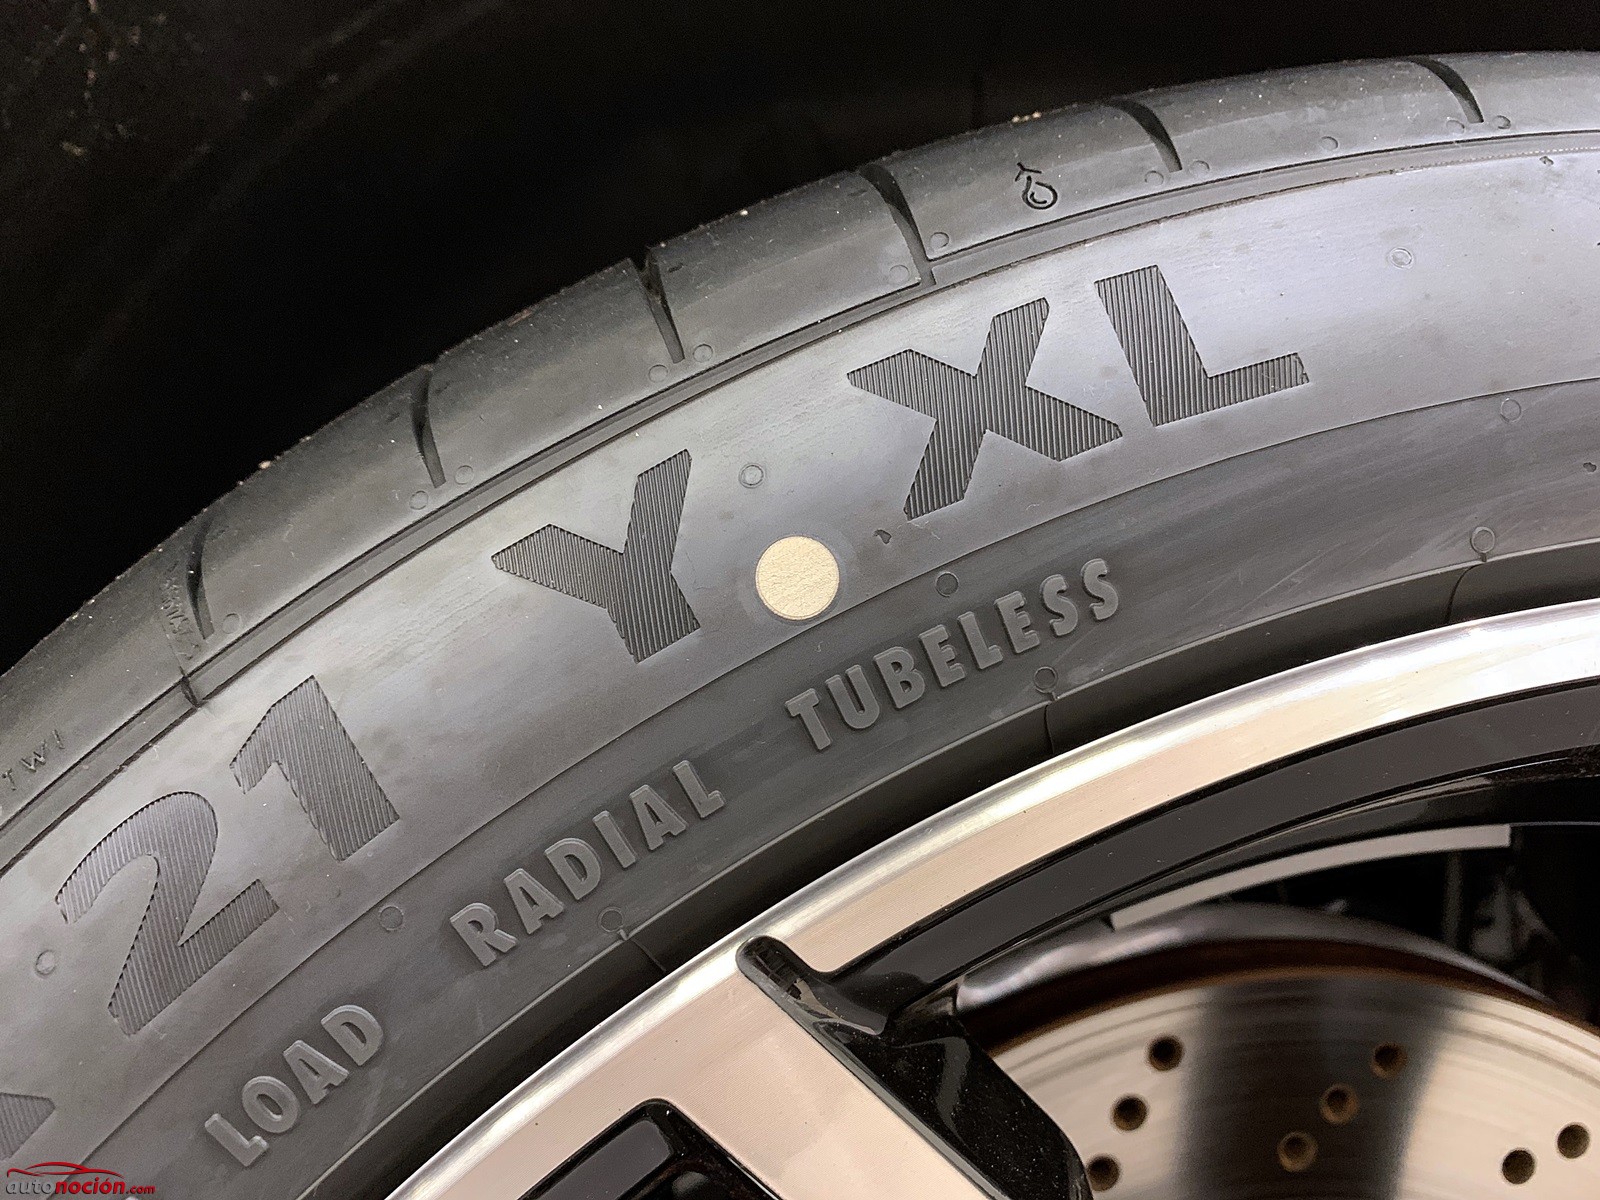 Seguramente hayas visto este punto en tus neumáticos: ¿Sabes para qué sirve?